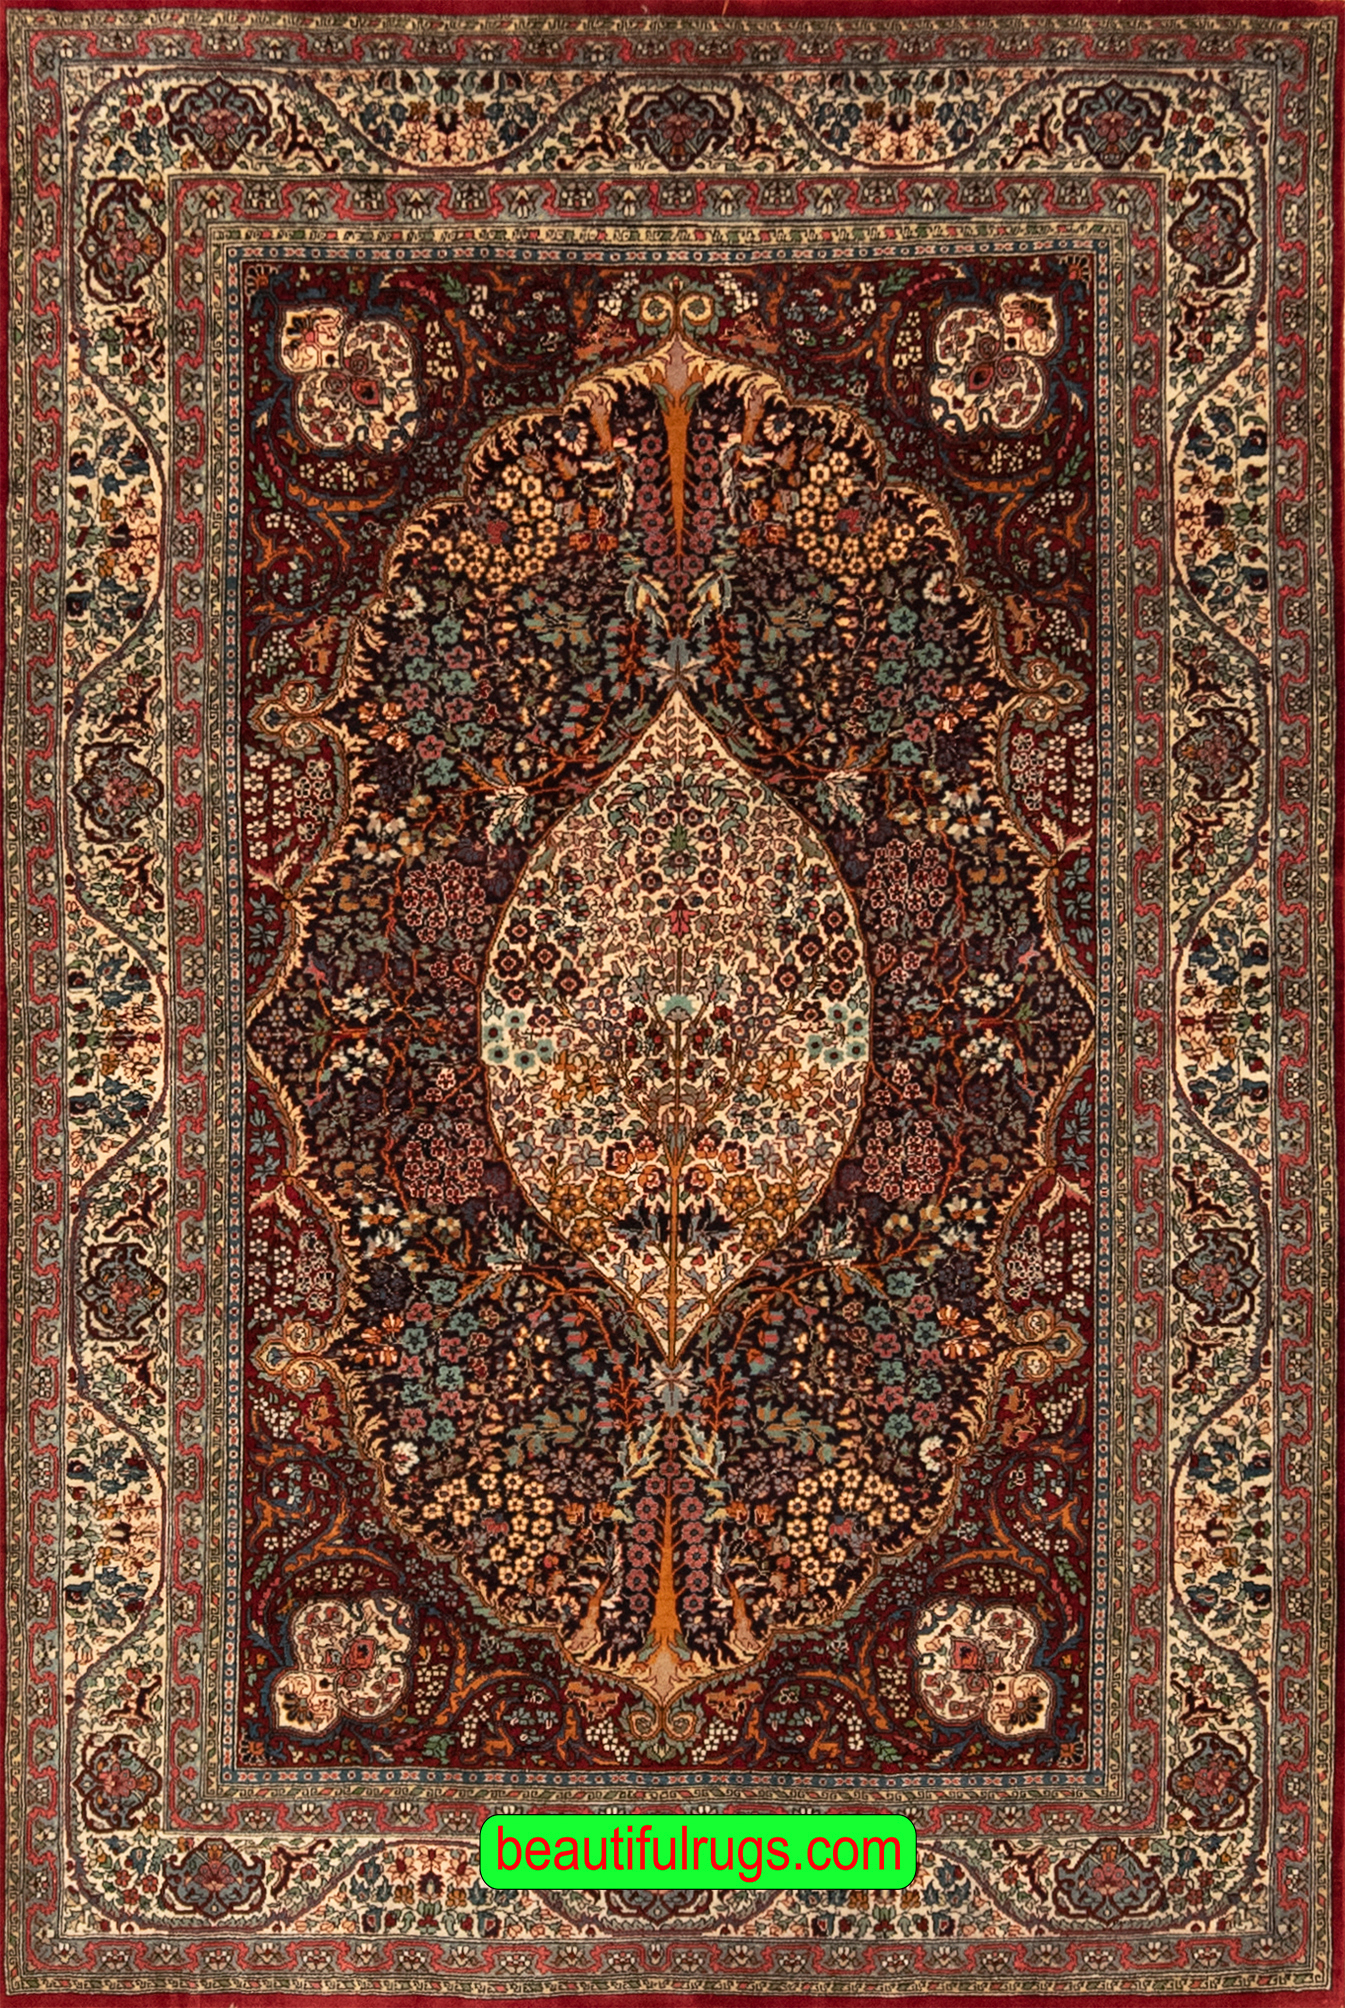 Vintage Handmade Persian Semnan Rug, Vegetable Dyed Persian Rug. Size 5x6.1.